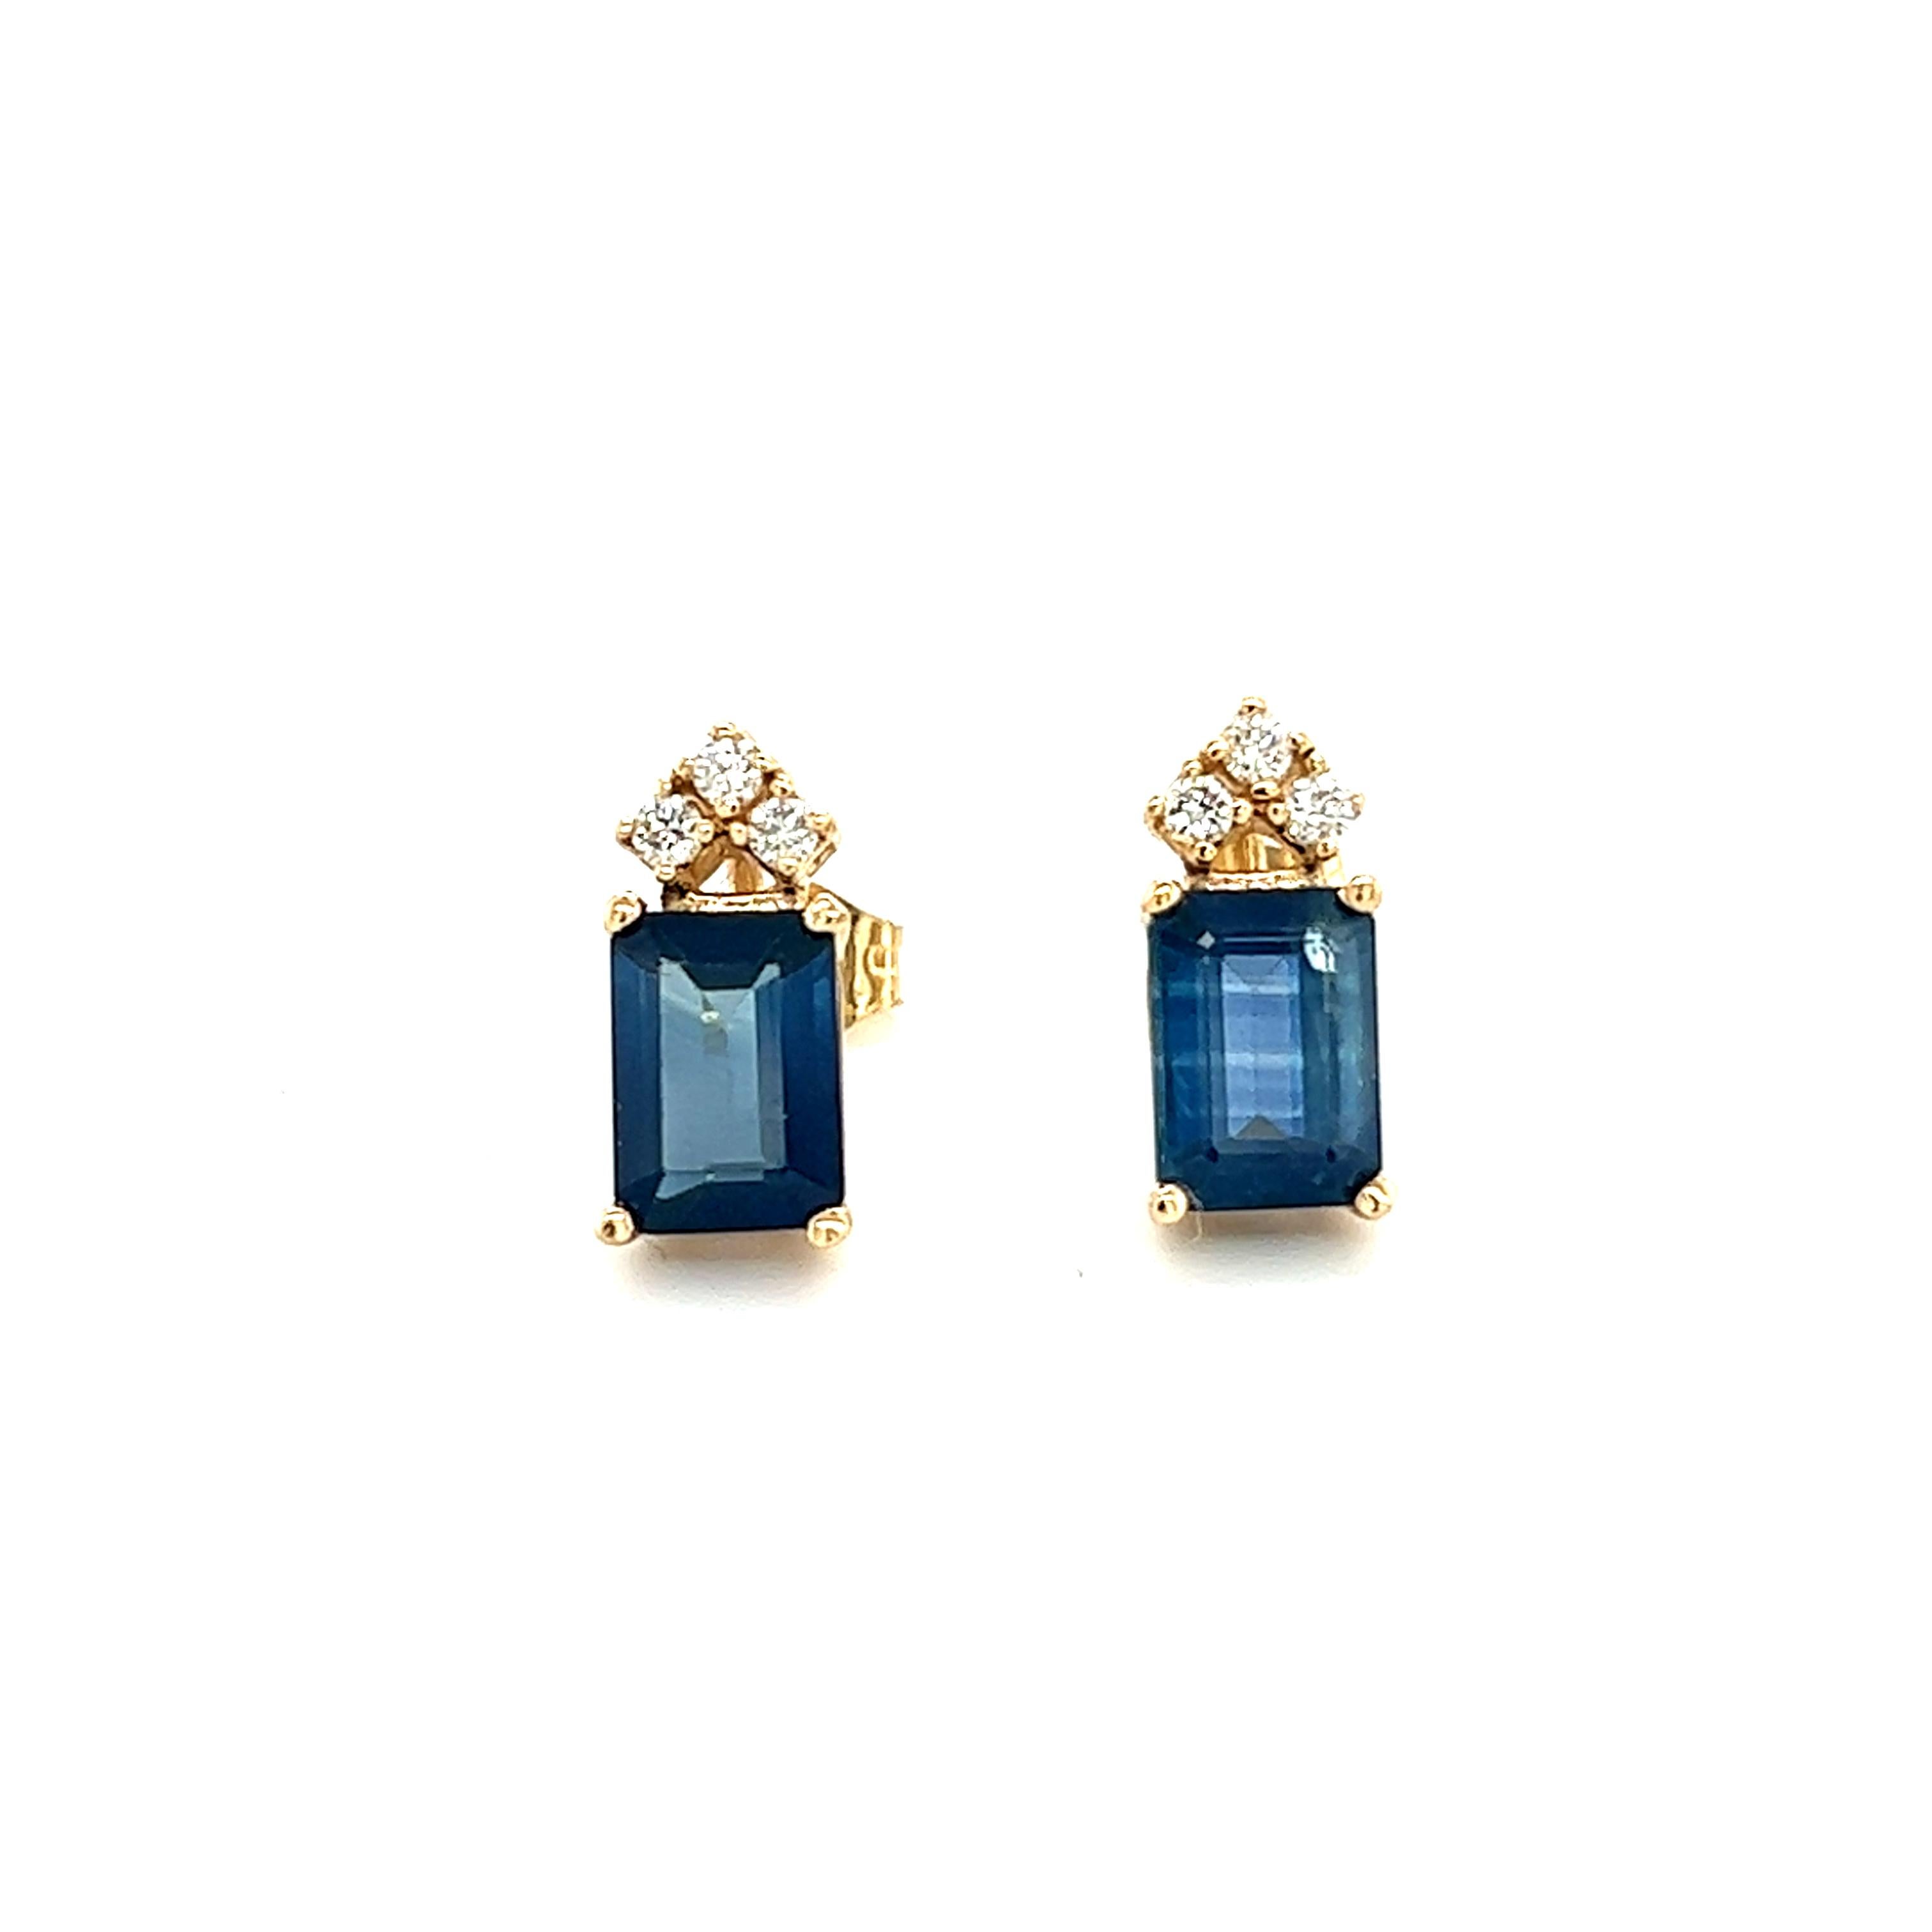 Emerald Cut Natural Sapphire Diamond Earrings 14k Gold 2.14 TCW Certified For Sale